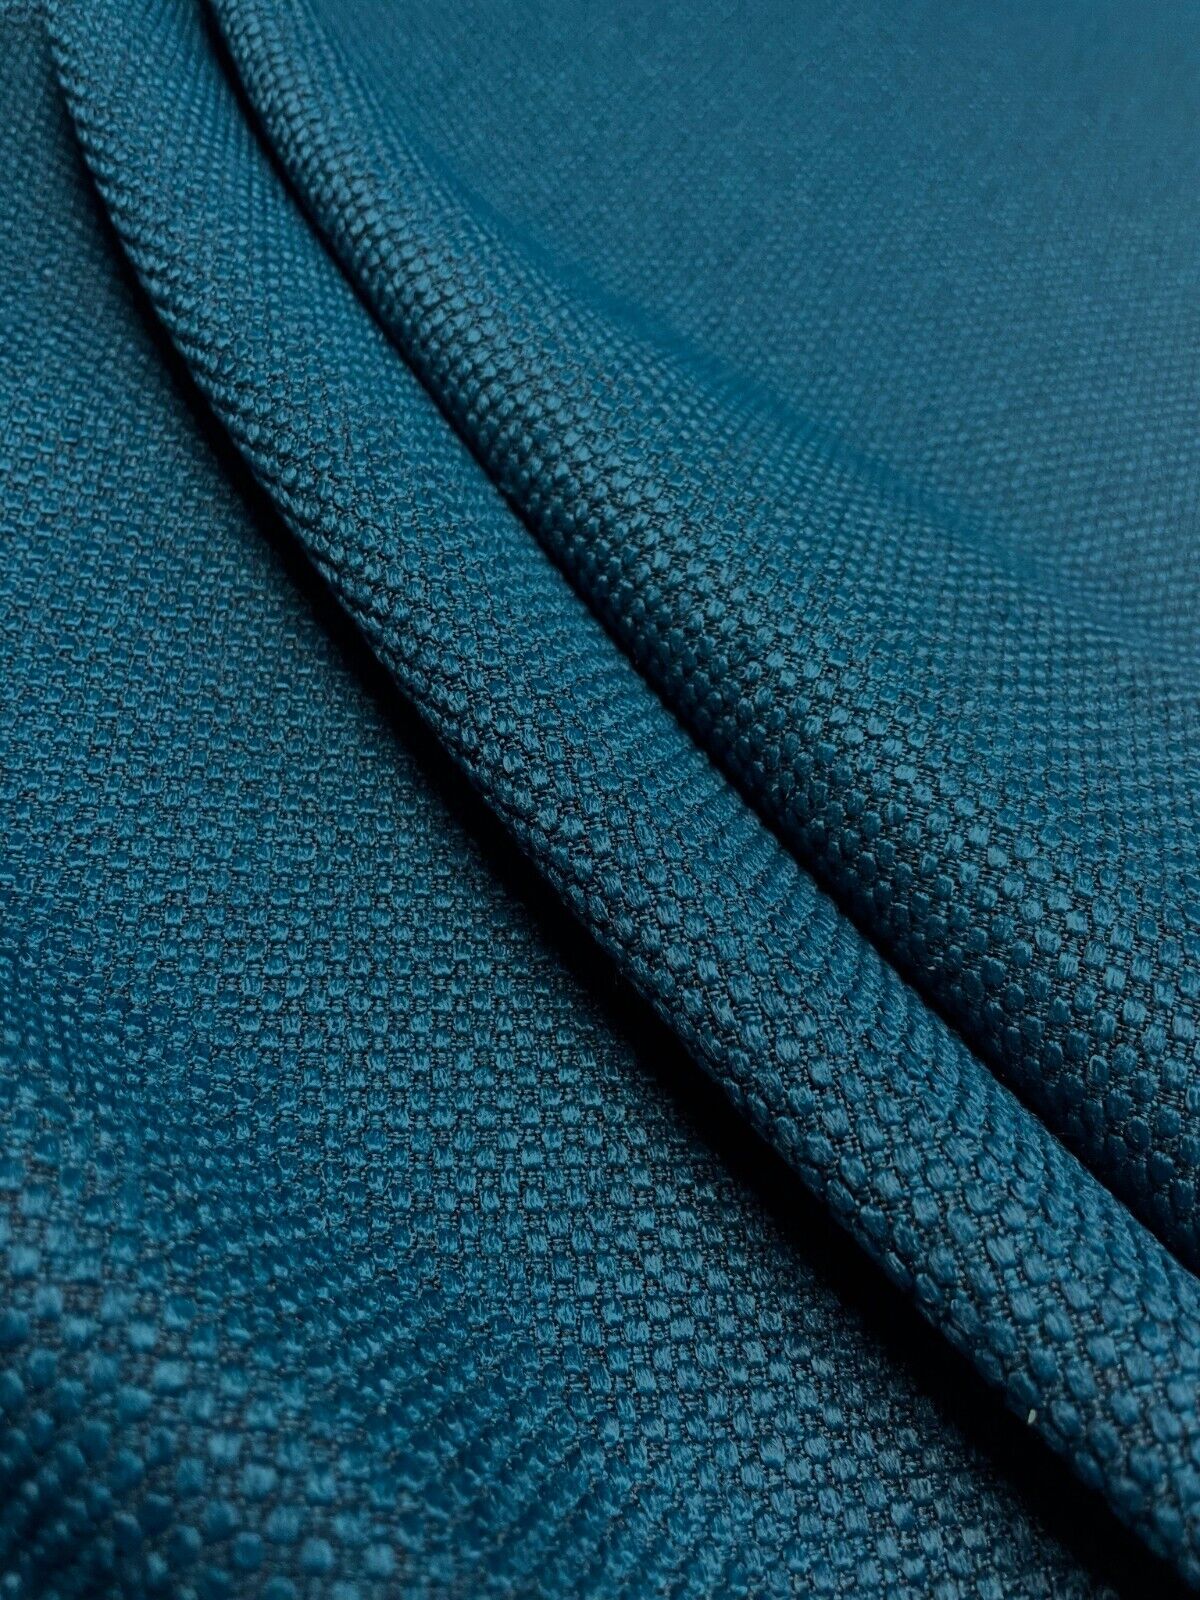 5.875 yds Maharam Merit Aegean Blue Polyester Upholstery Fabric $229 MSRP